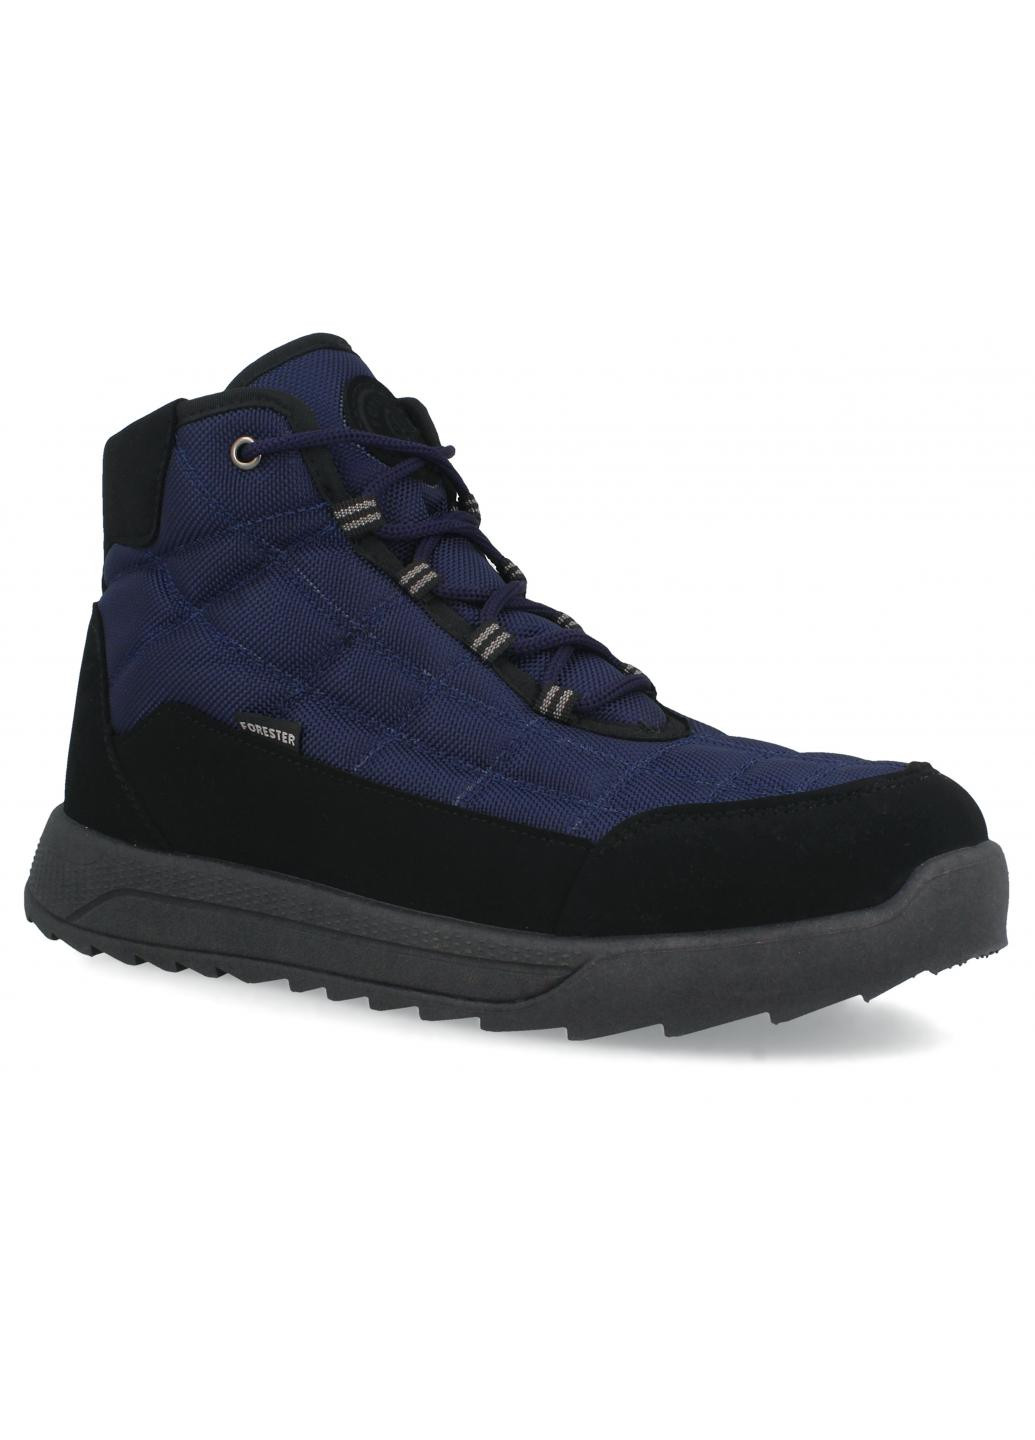 Синие зимние мужские ботинки fair camping 3804-89 Forester